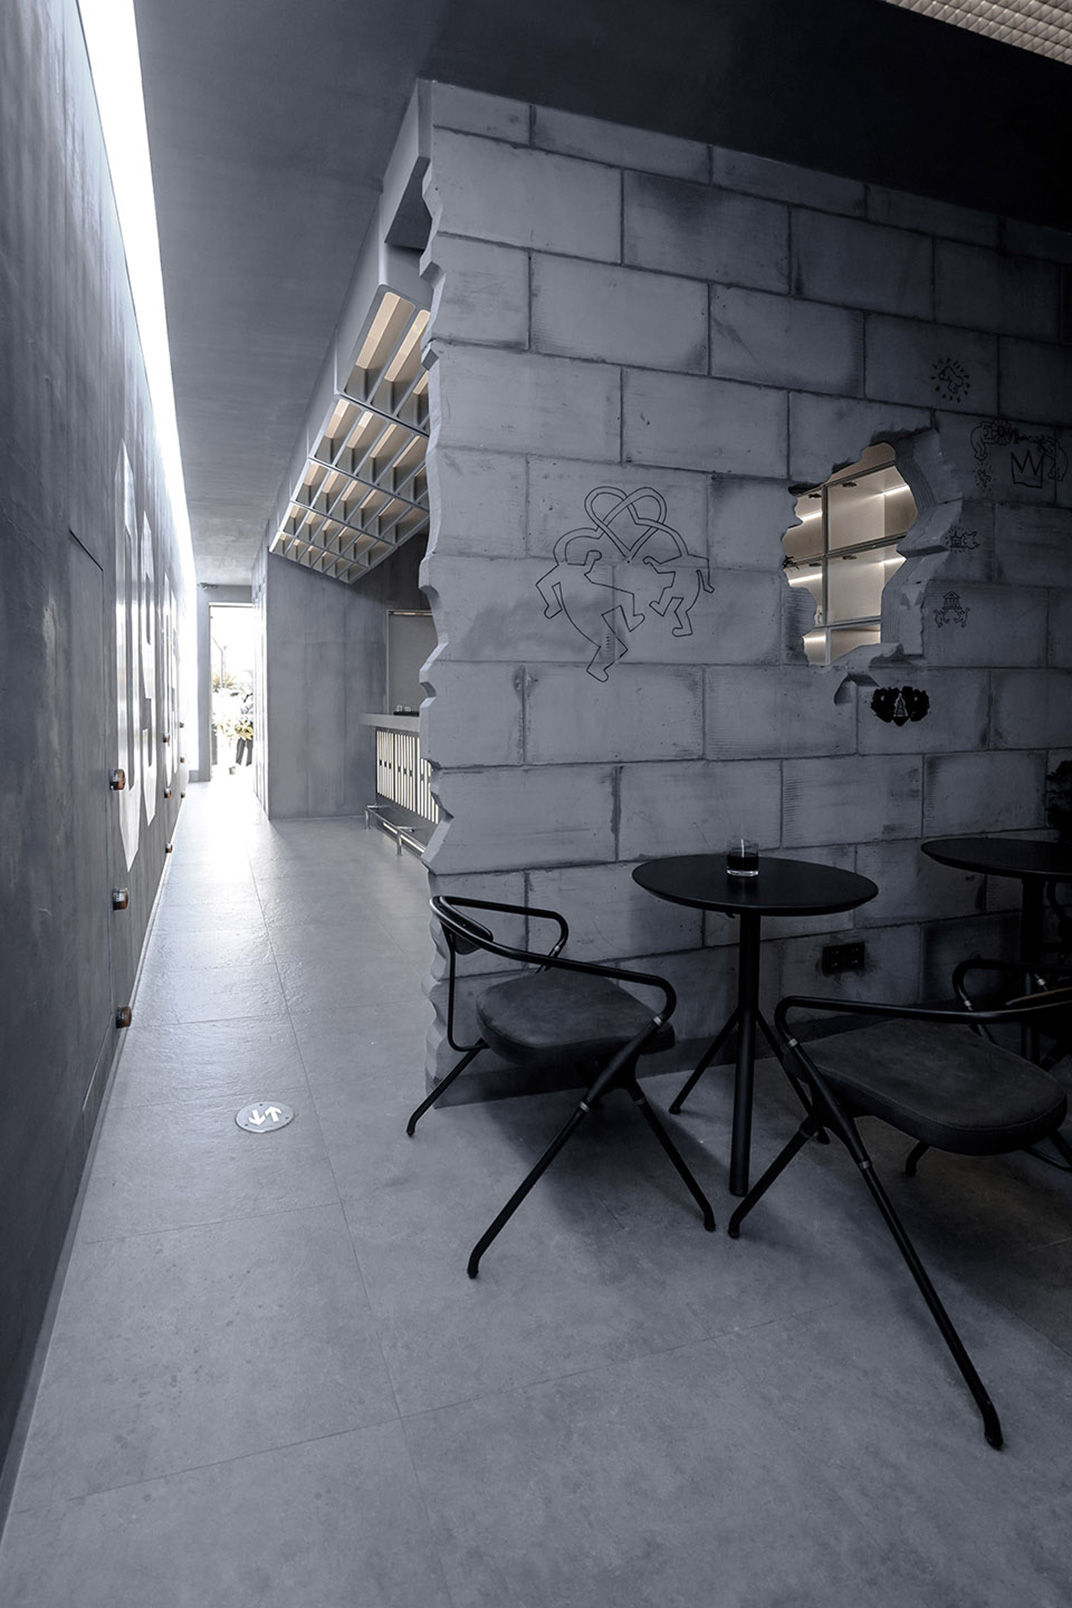 onnnnnne more酒吧 杭州 酒吧 不锈钢 阵列空间 瓷砖 亚克力 logo设计 vi设计 空间设计